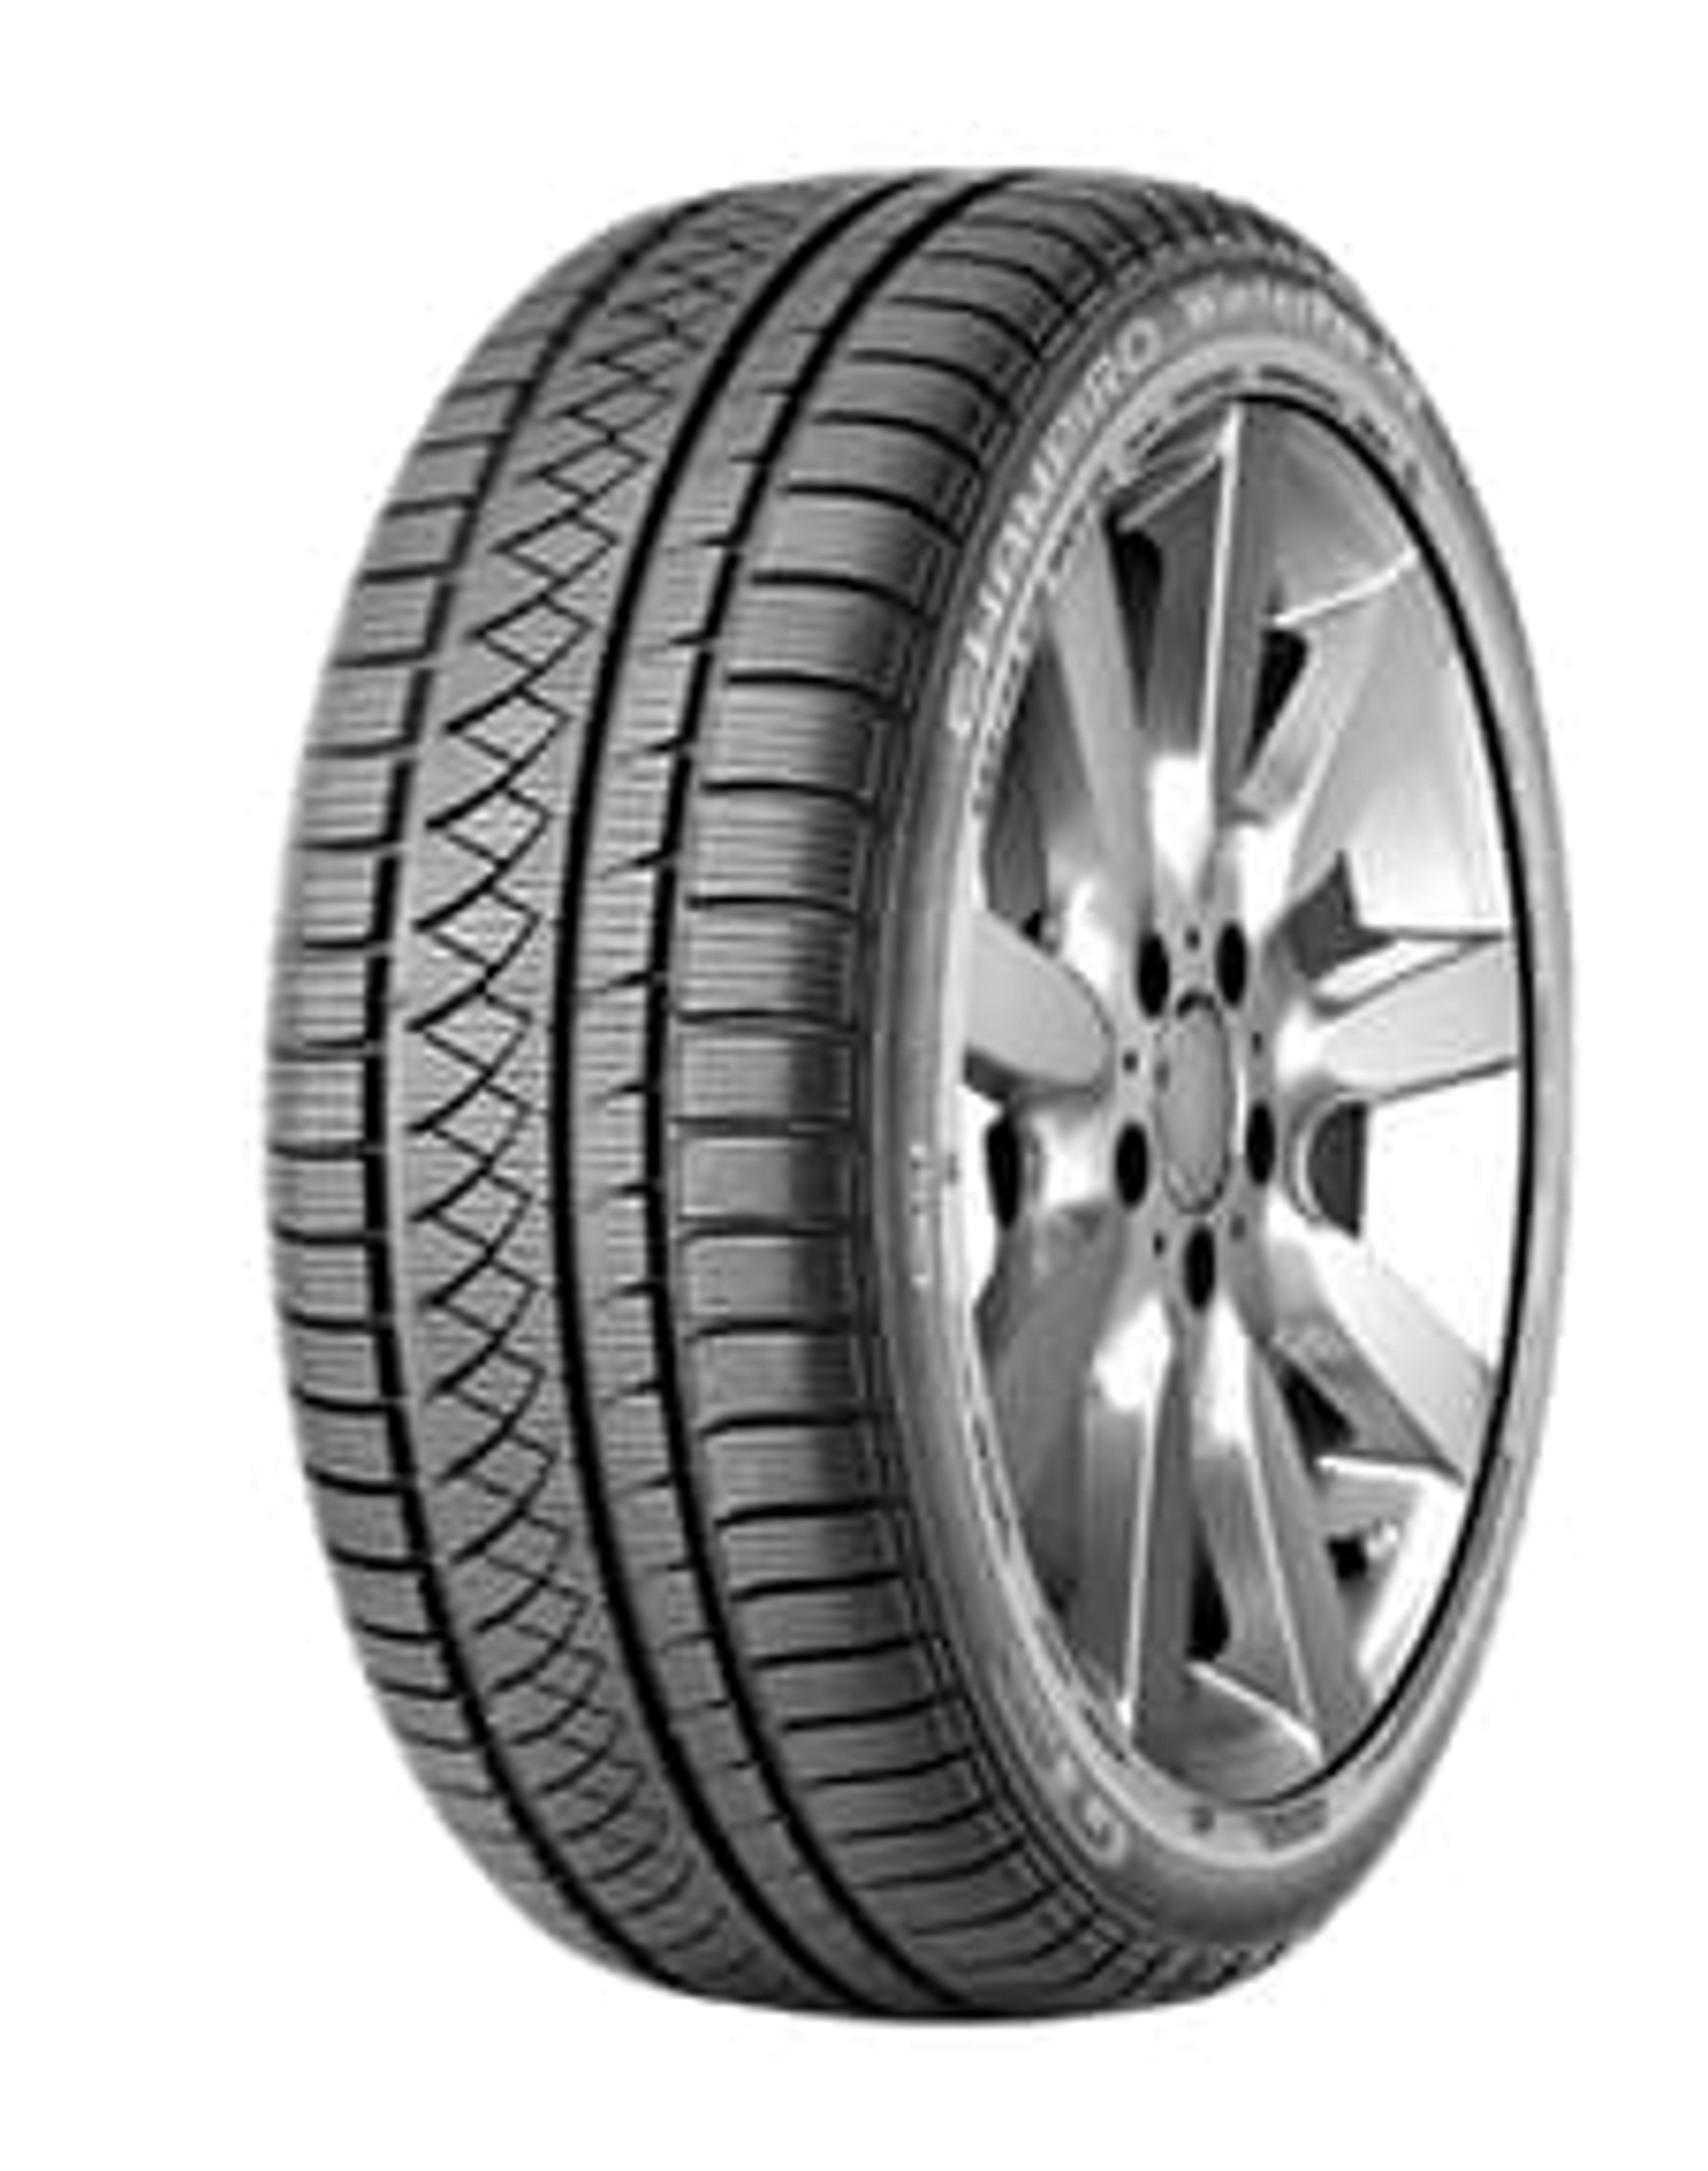 Buy GT Radial Champiro Winterpro Tires Online SimpleTire HP 